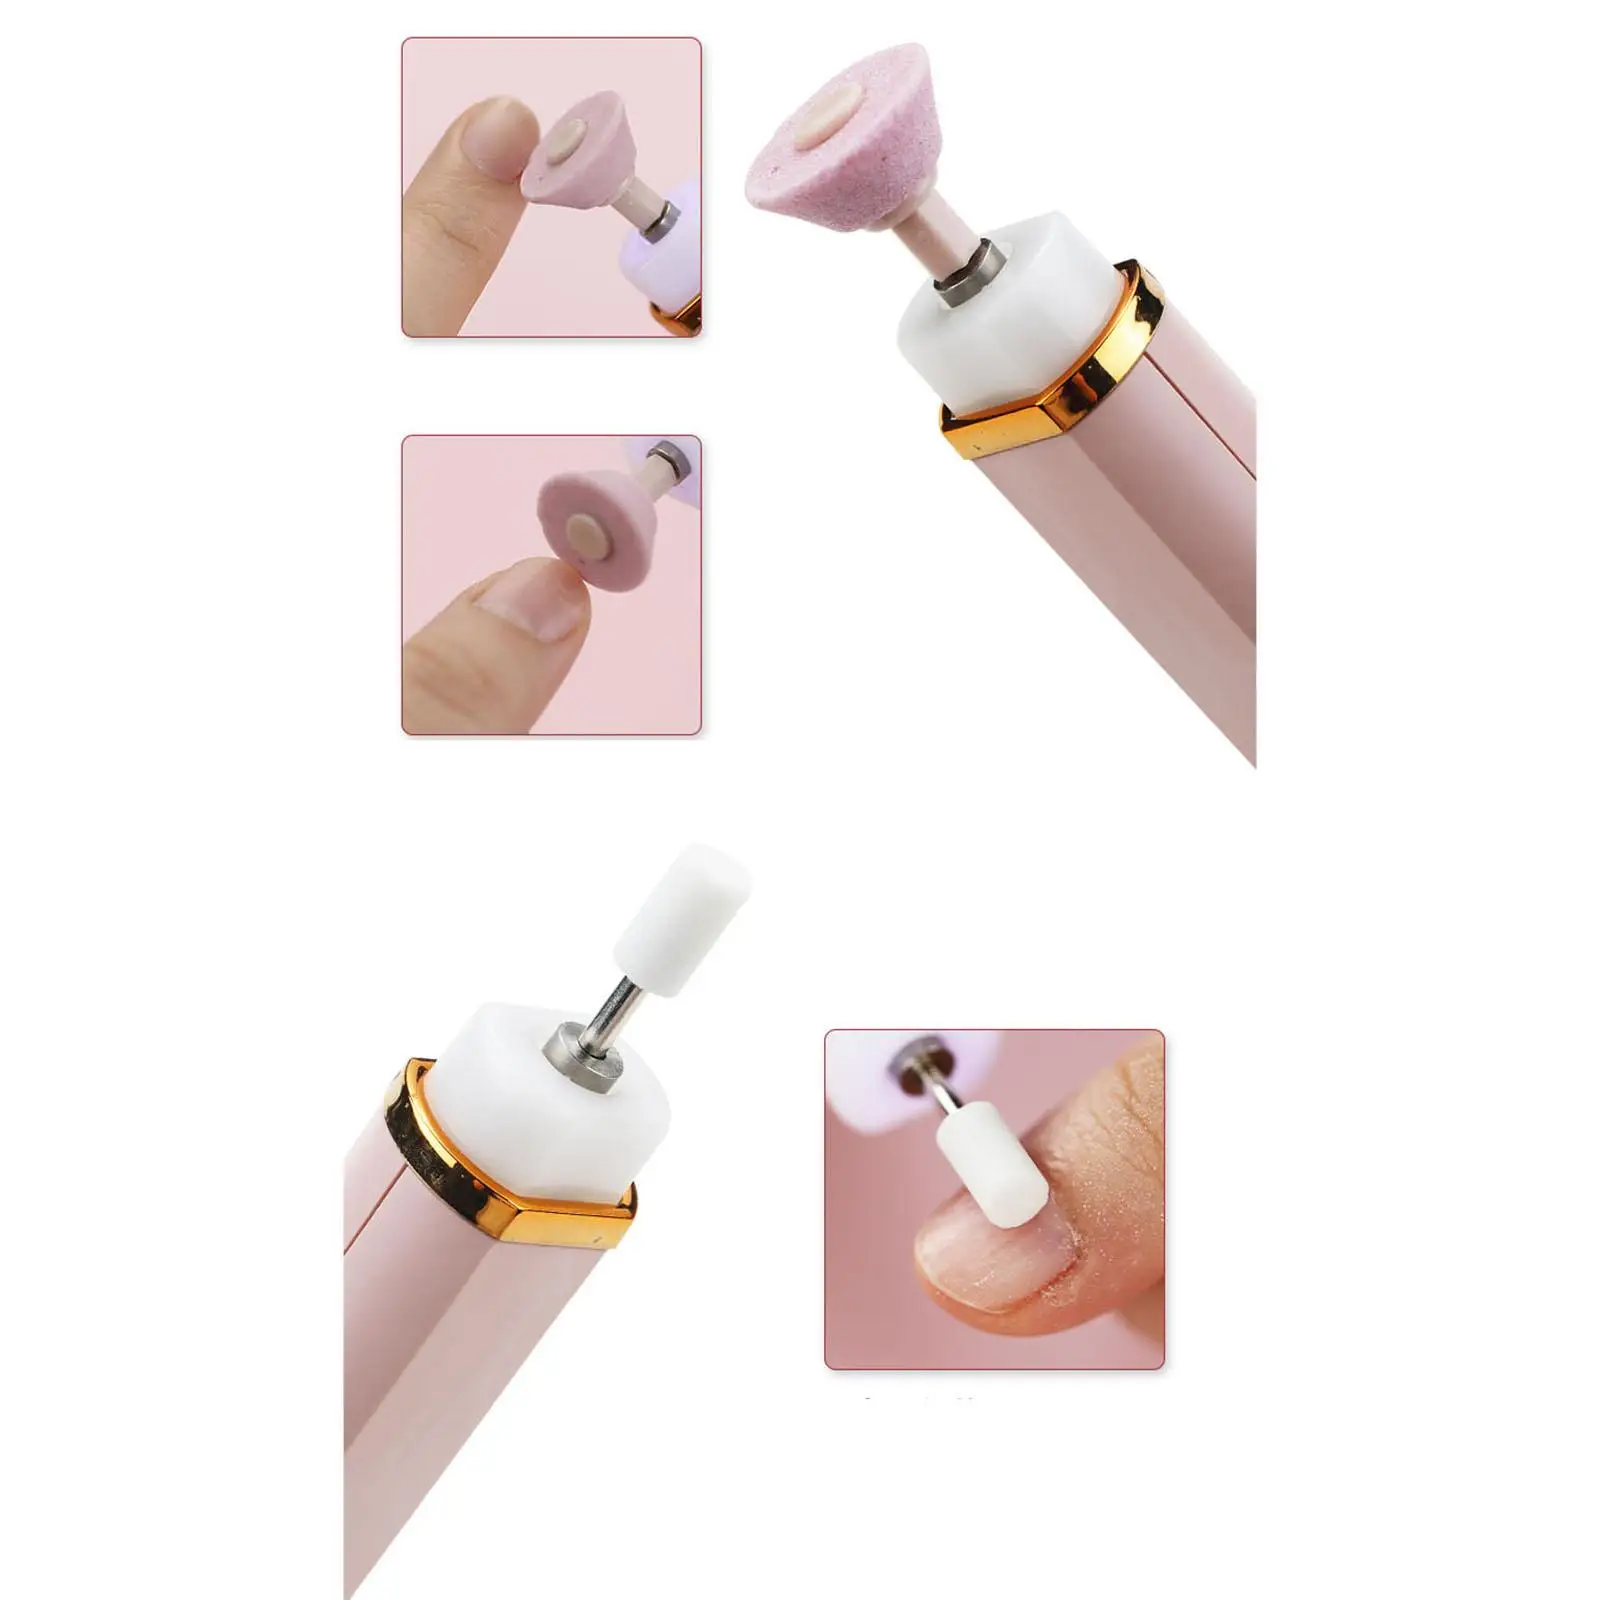 Cordless Nail Drill Set Fingernail Grinder Kit Gel Removing Acrylic Nails Gel Polishing for Sculpt Nail Polish Personal Home Use